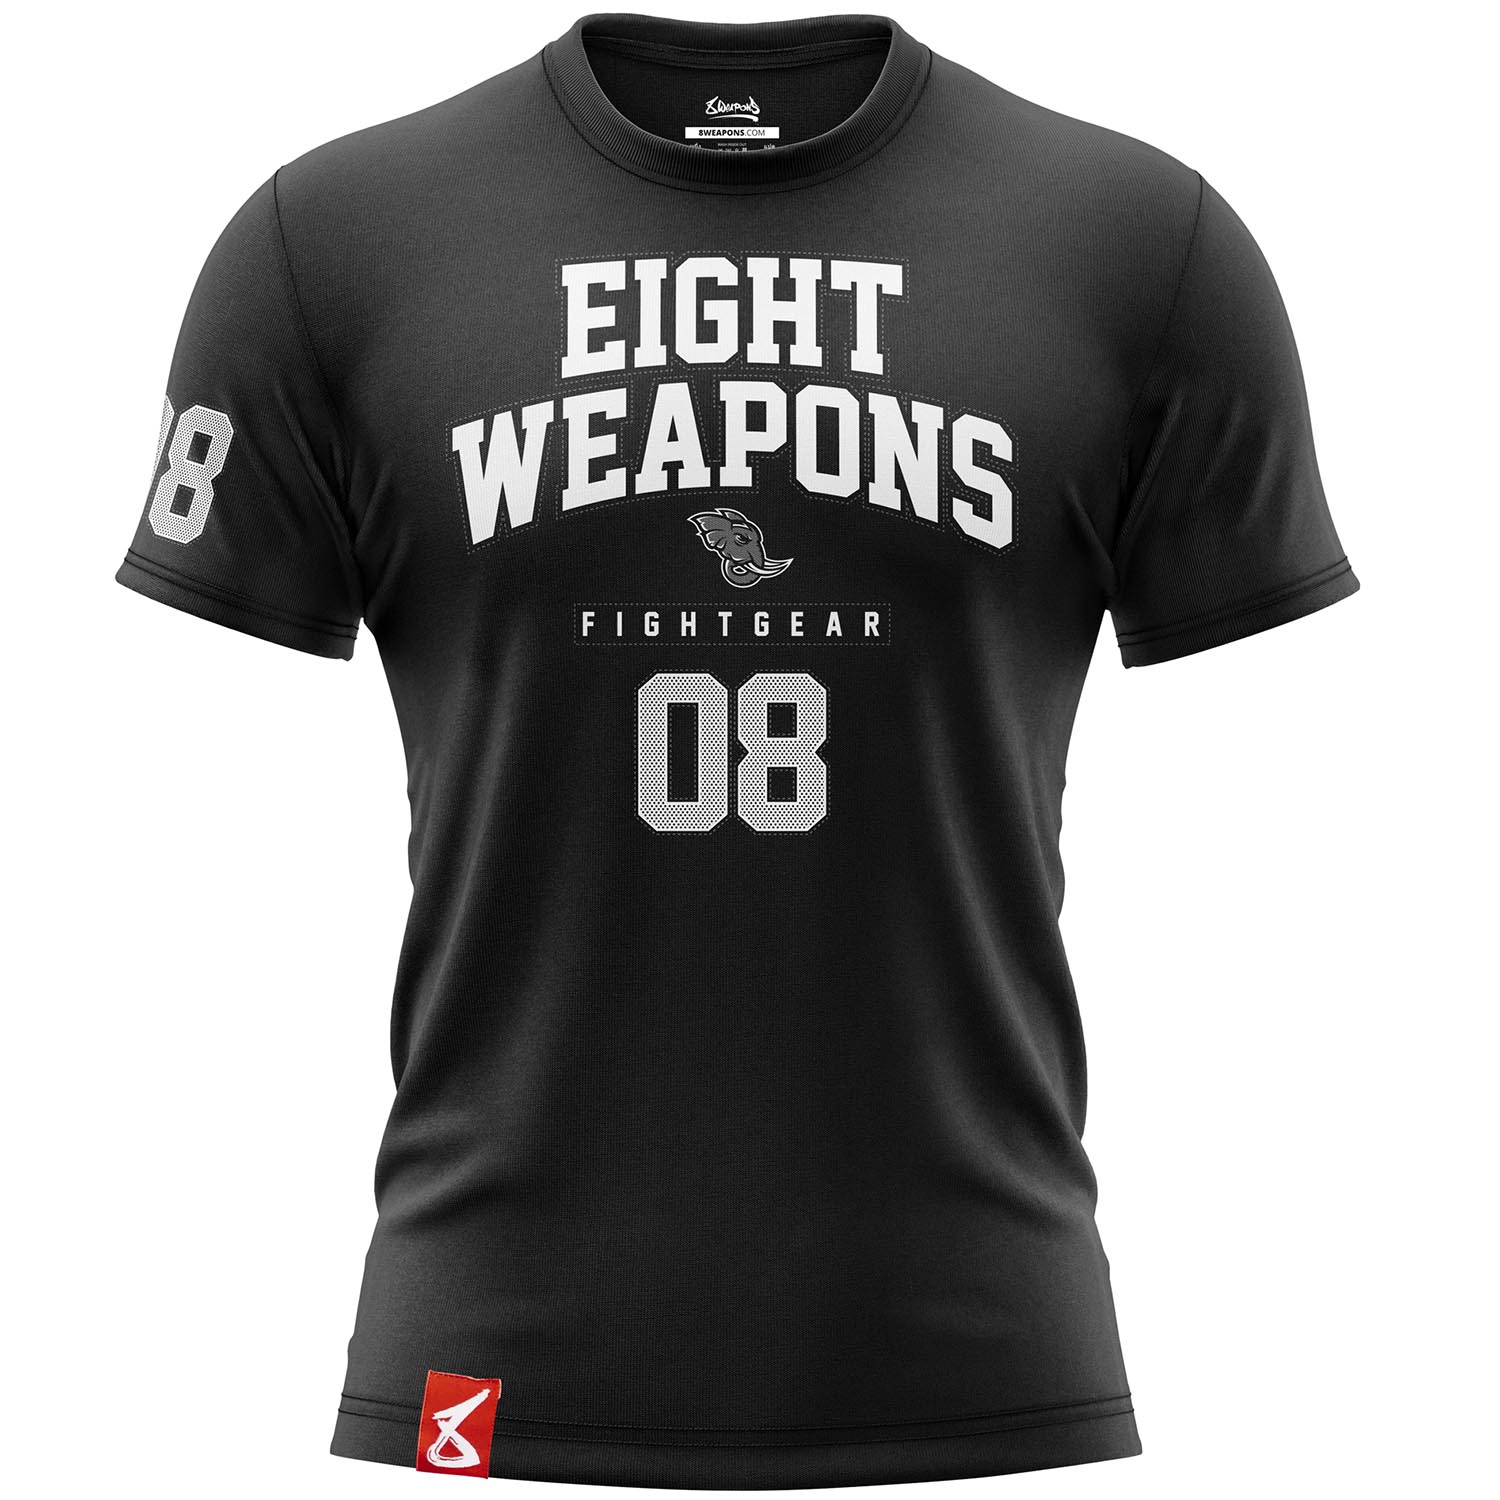 8 WEAPONS T-Shirt, Team 08 2.0, black, S